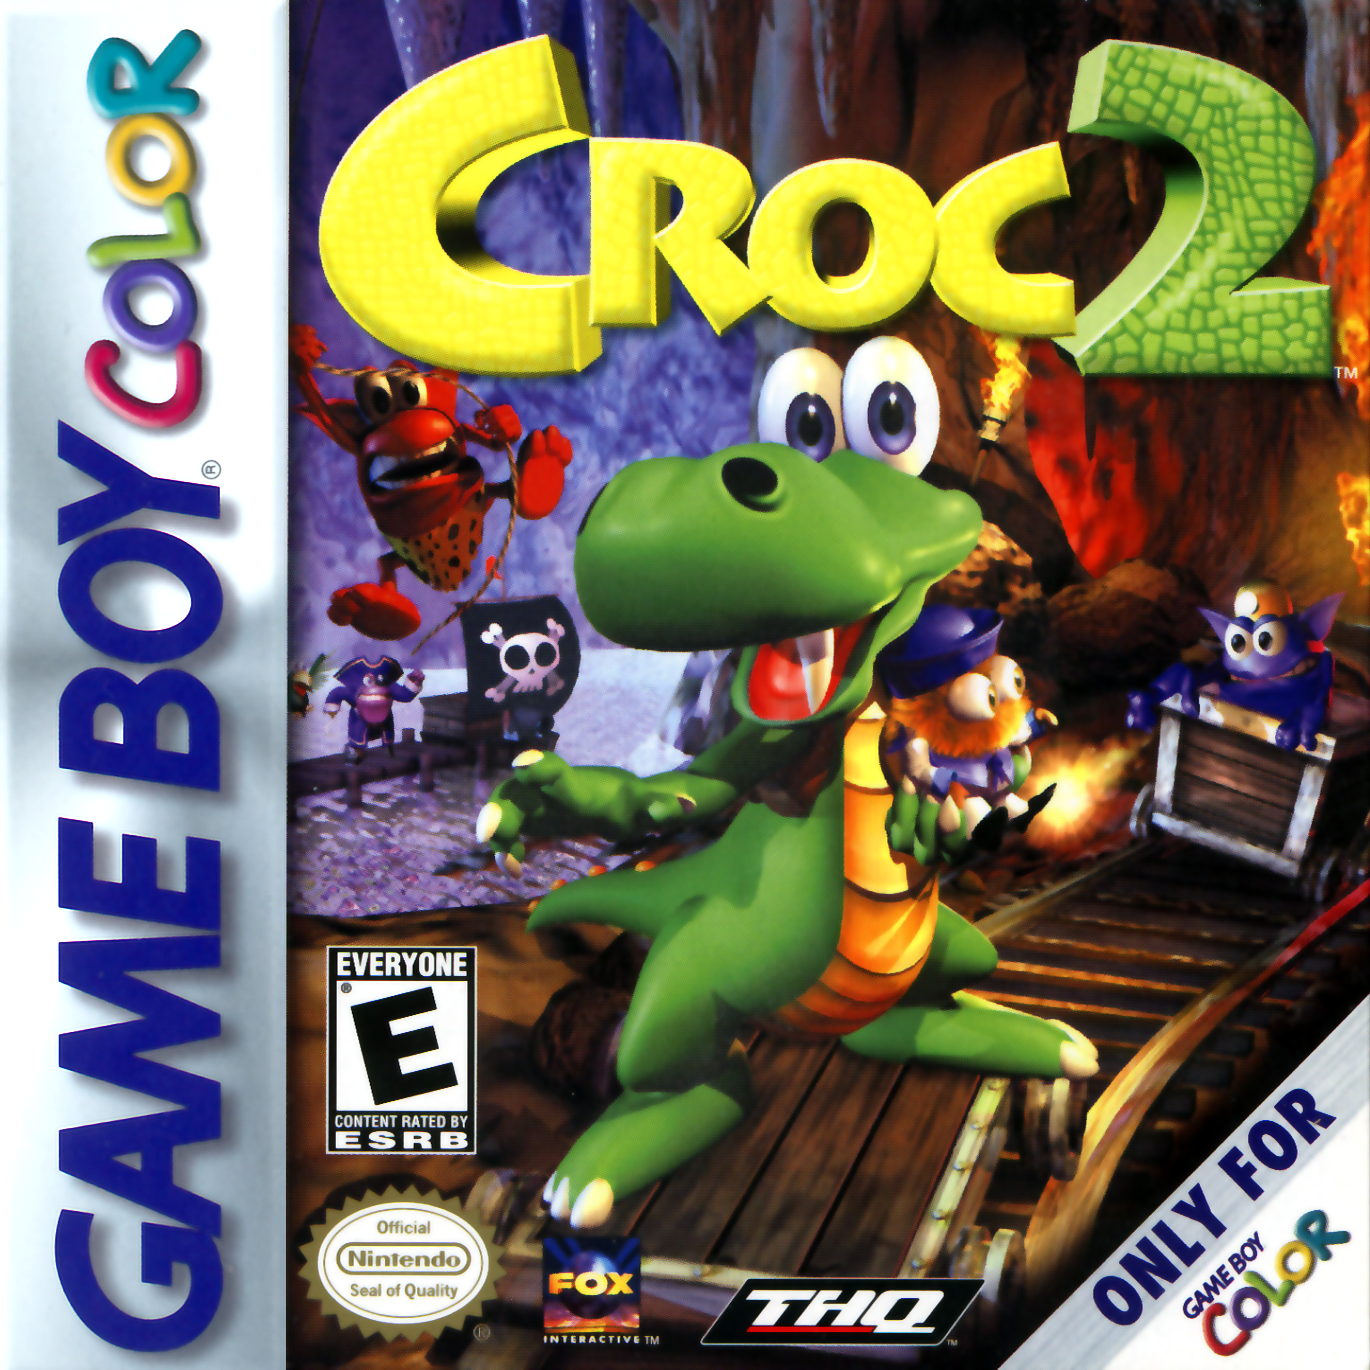 Croc 2 (Game Boy Color) | Croc: Wiki of the Gobbos | Fandom